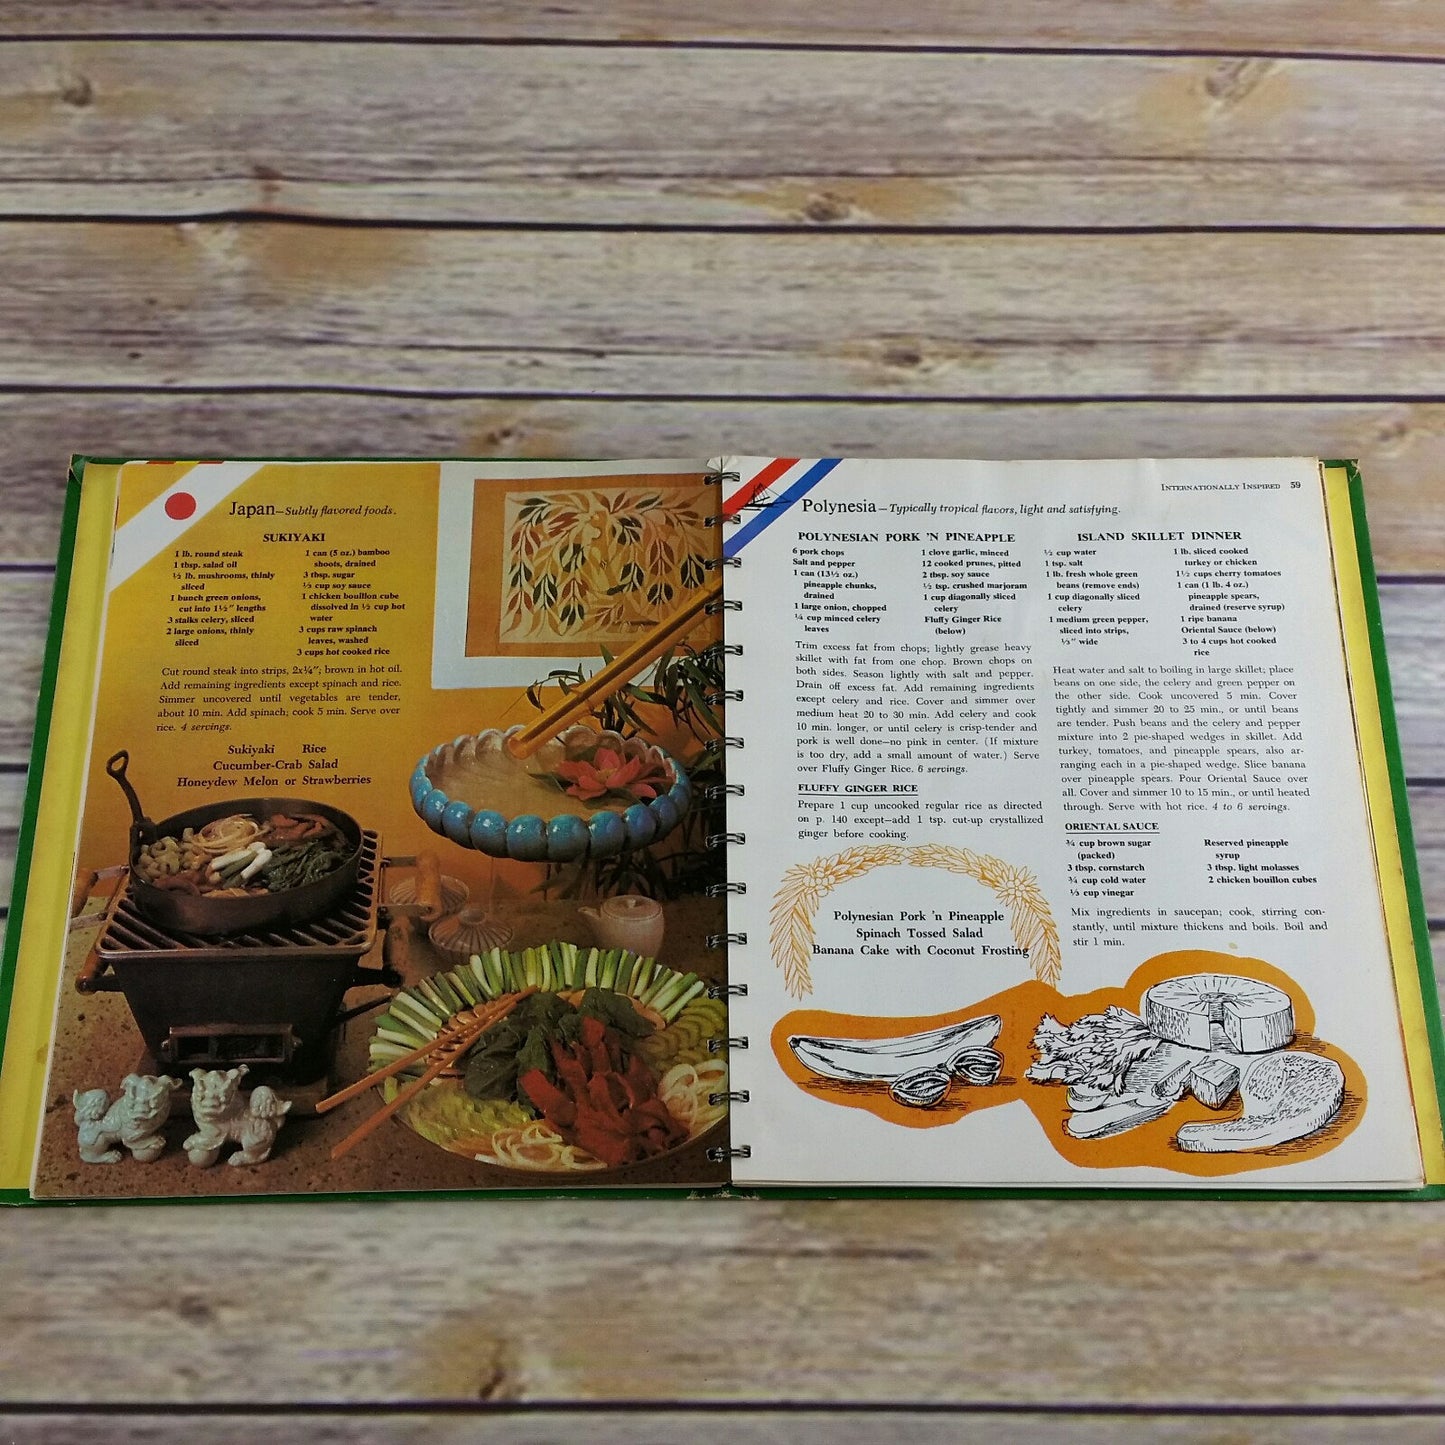 Vintage Cookbook Betty Crocker Dinner in a Dish 1965 1st Edition Green Hardcover Spiral Bound Golden Press Recipes Casseroles Skillet